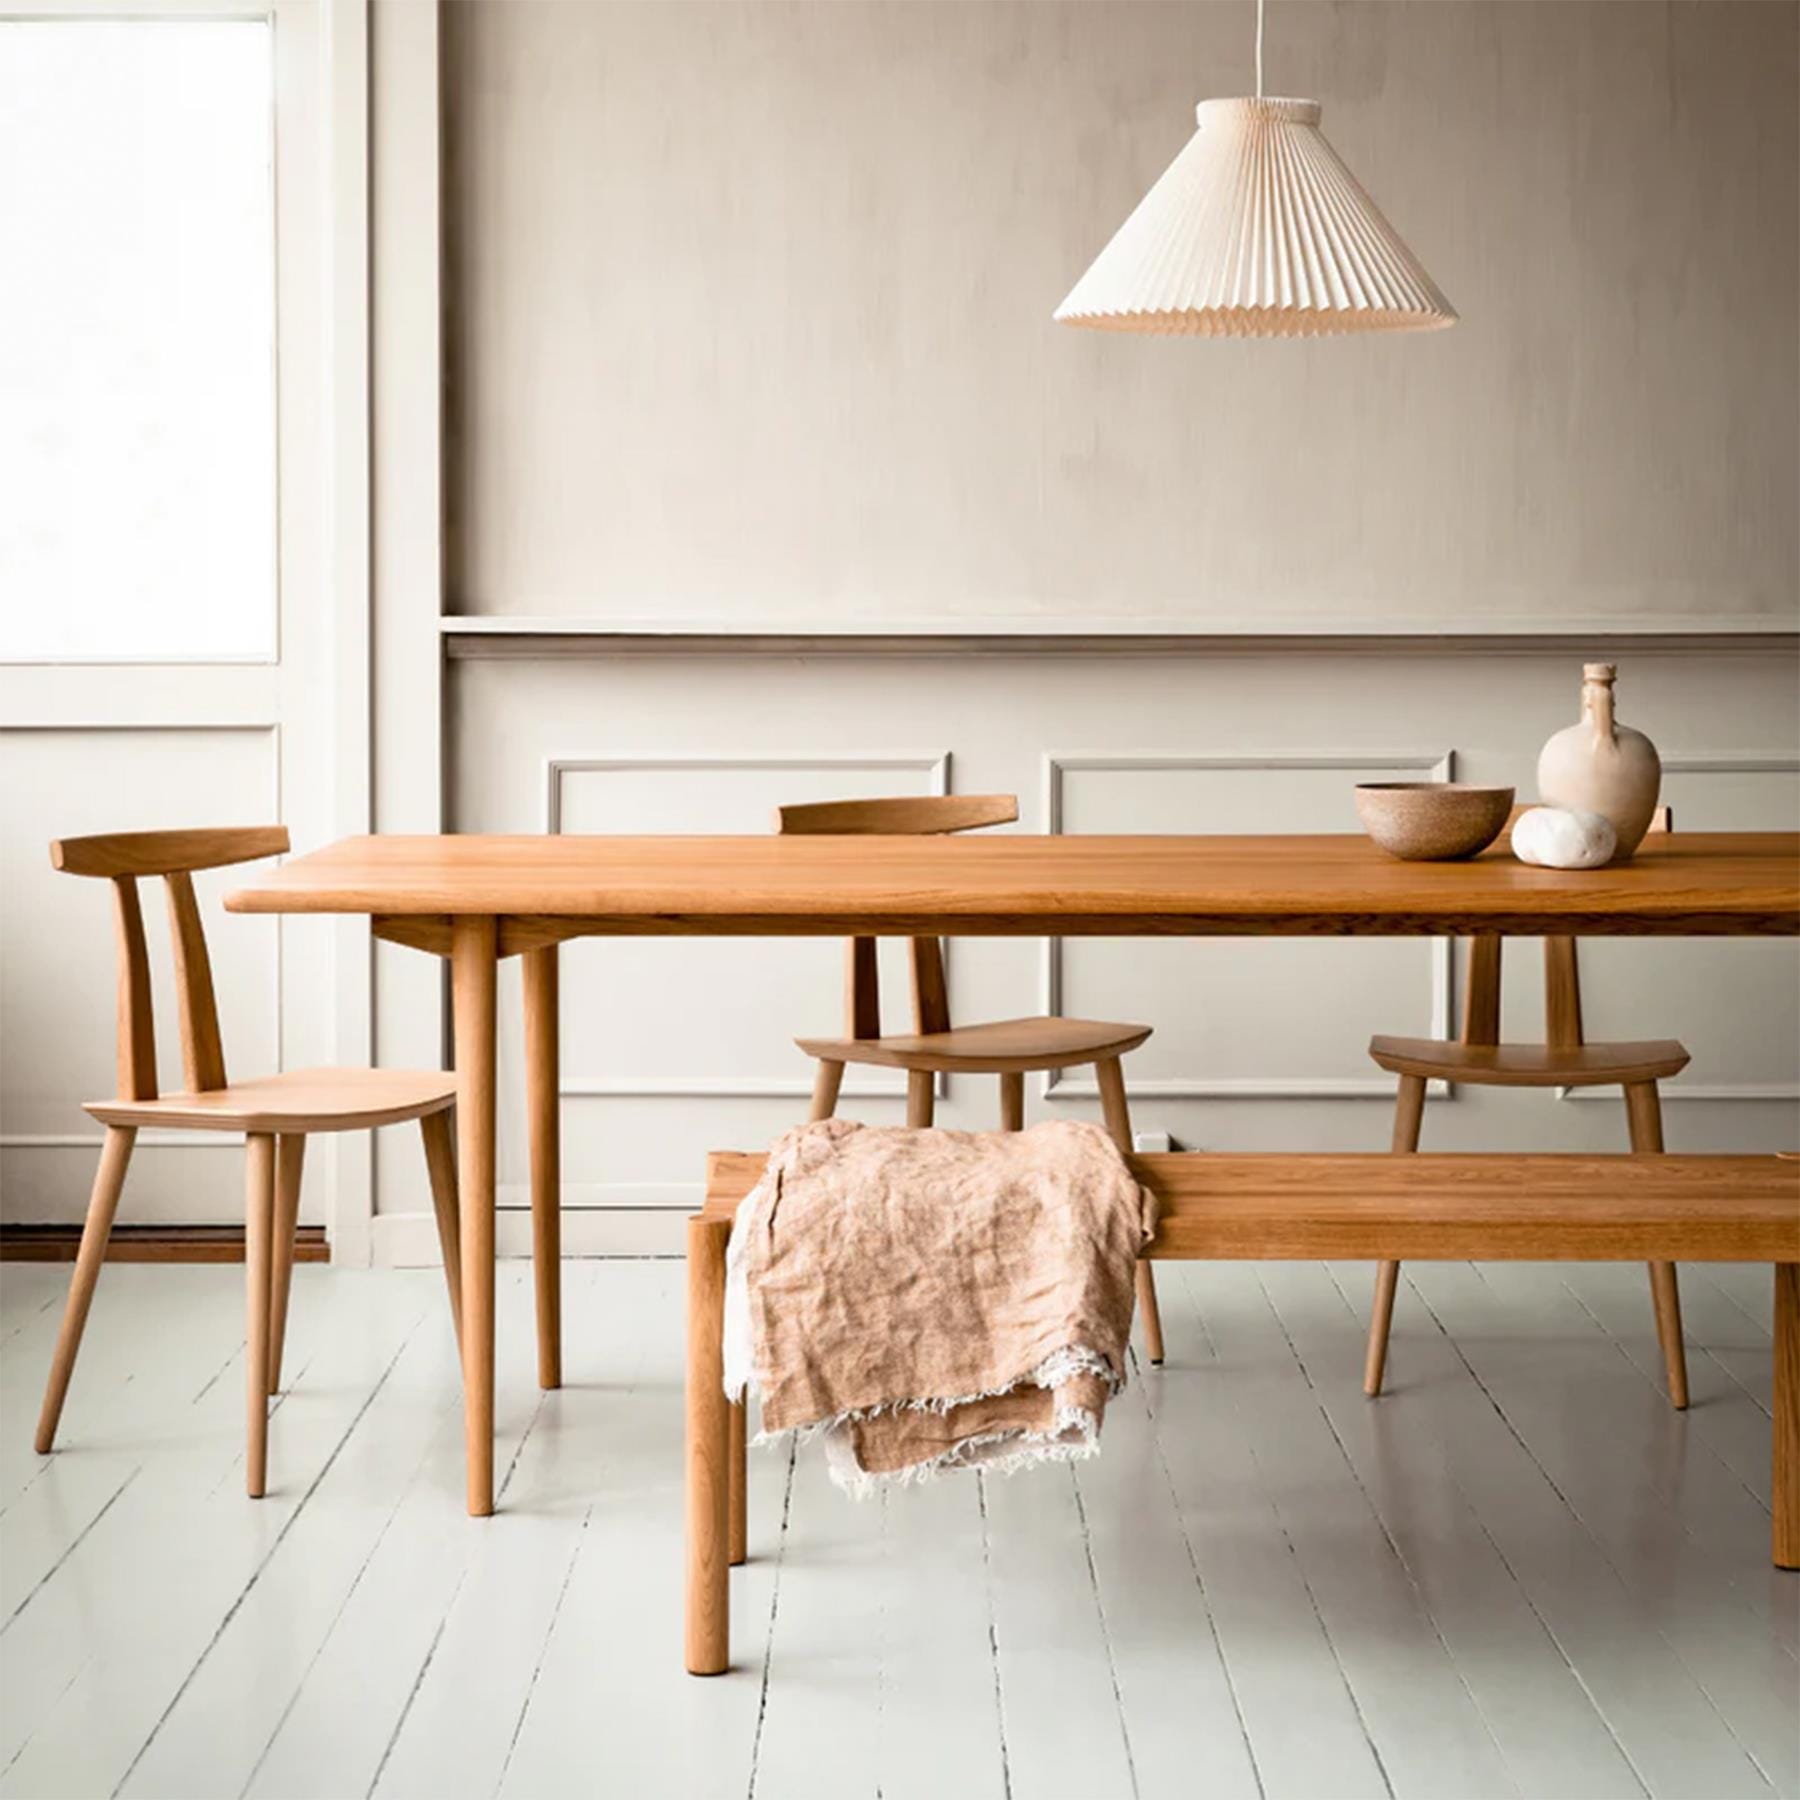 Make Nordic Holmen Rectangular Dining Table Large Natural Oak Length 260cm Width 92cm Without Extra Leaves Light Wood Designer Furniture From